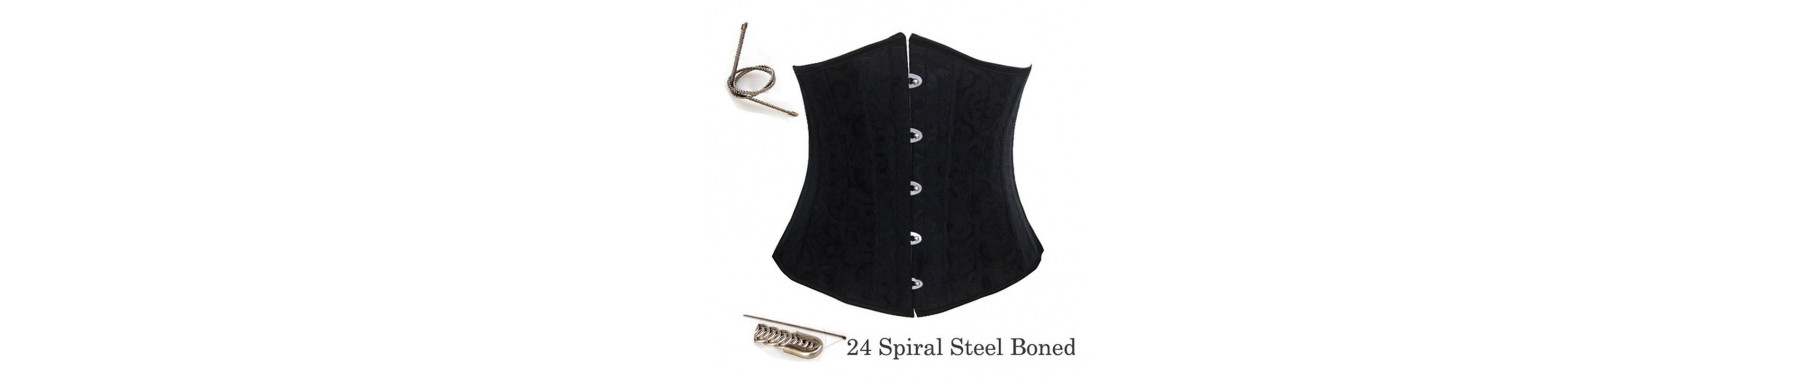 Steel bone corsets